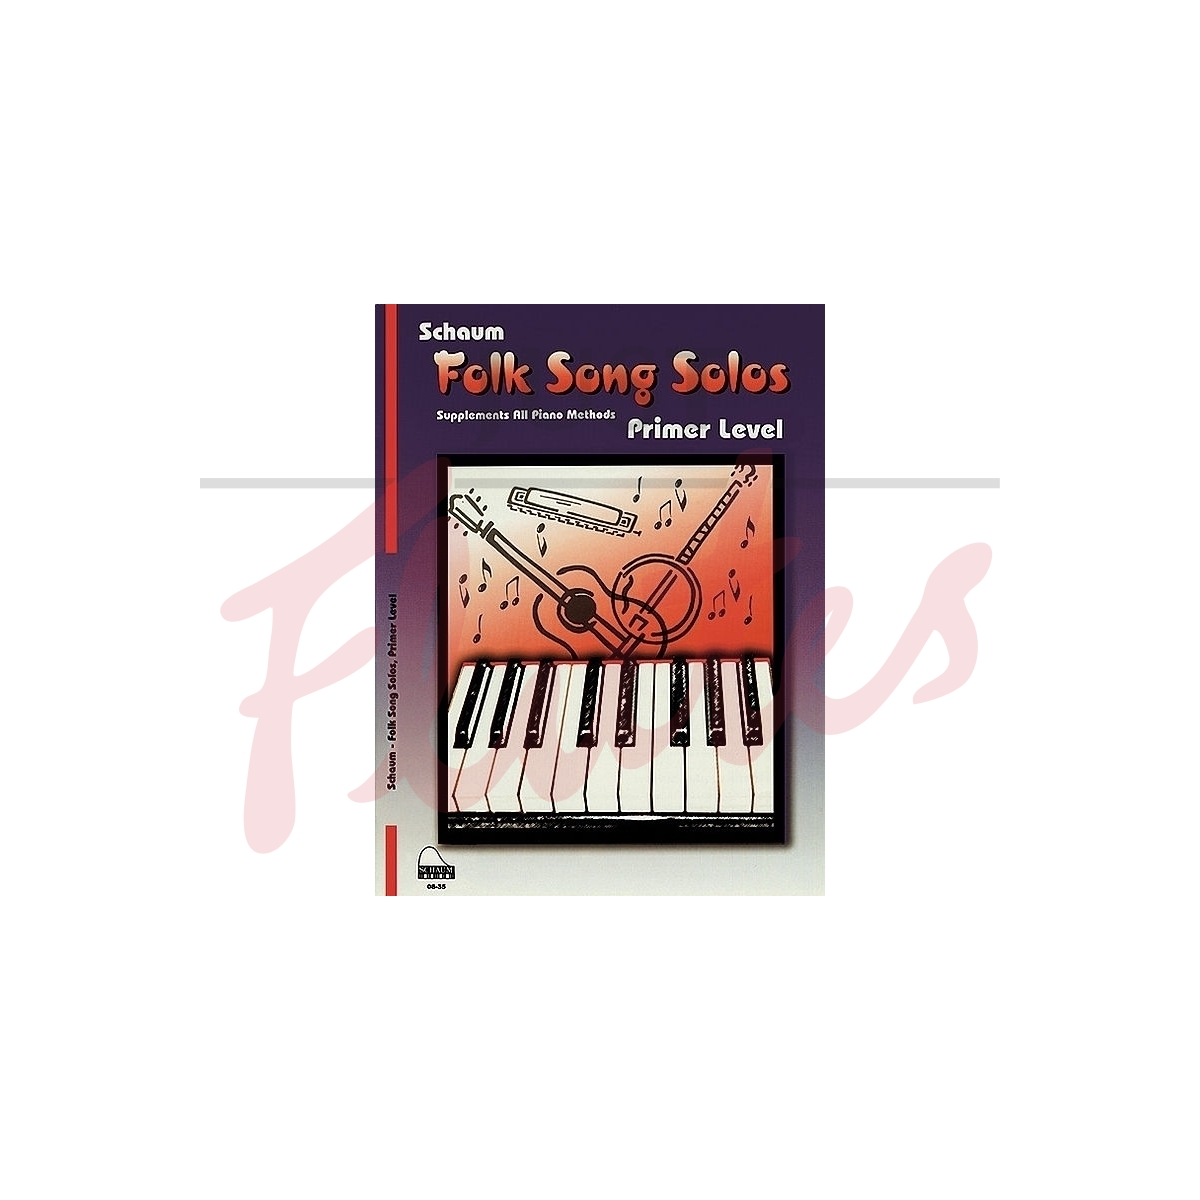 The Folk Song Book